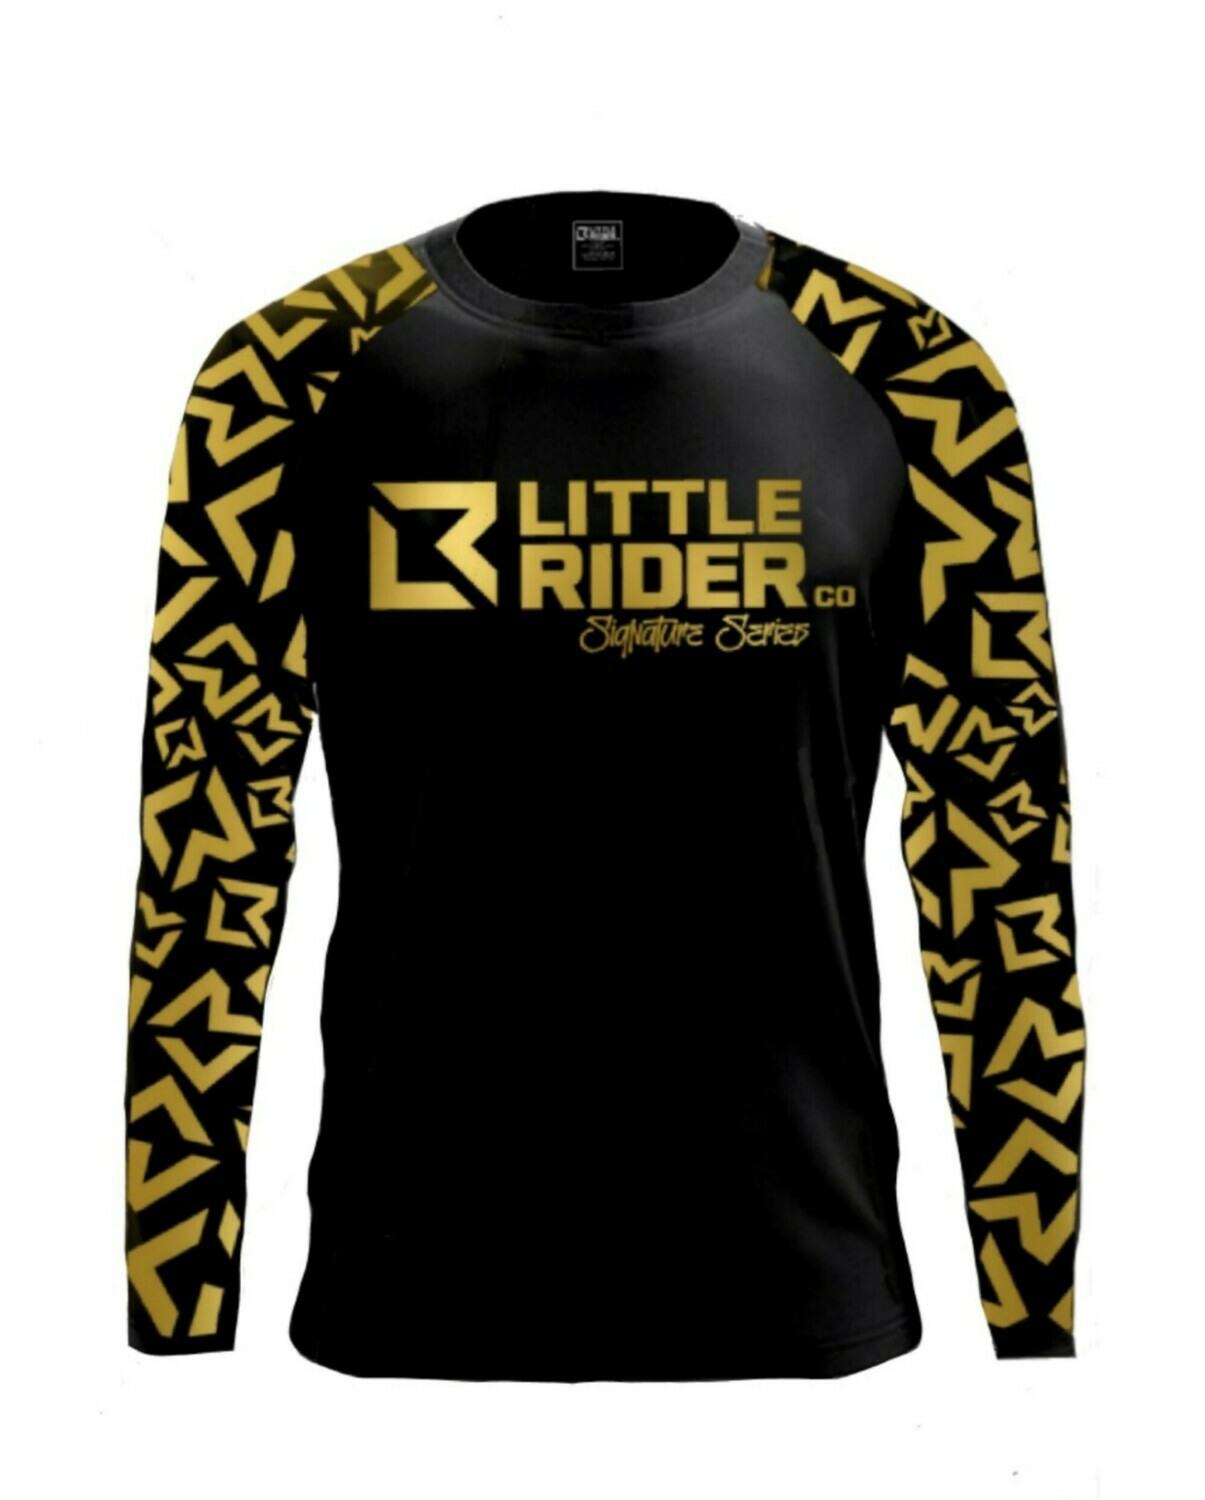 Little Rider Co Signature Series Jersey - BLACK & GOLD